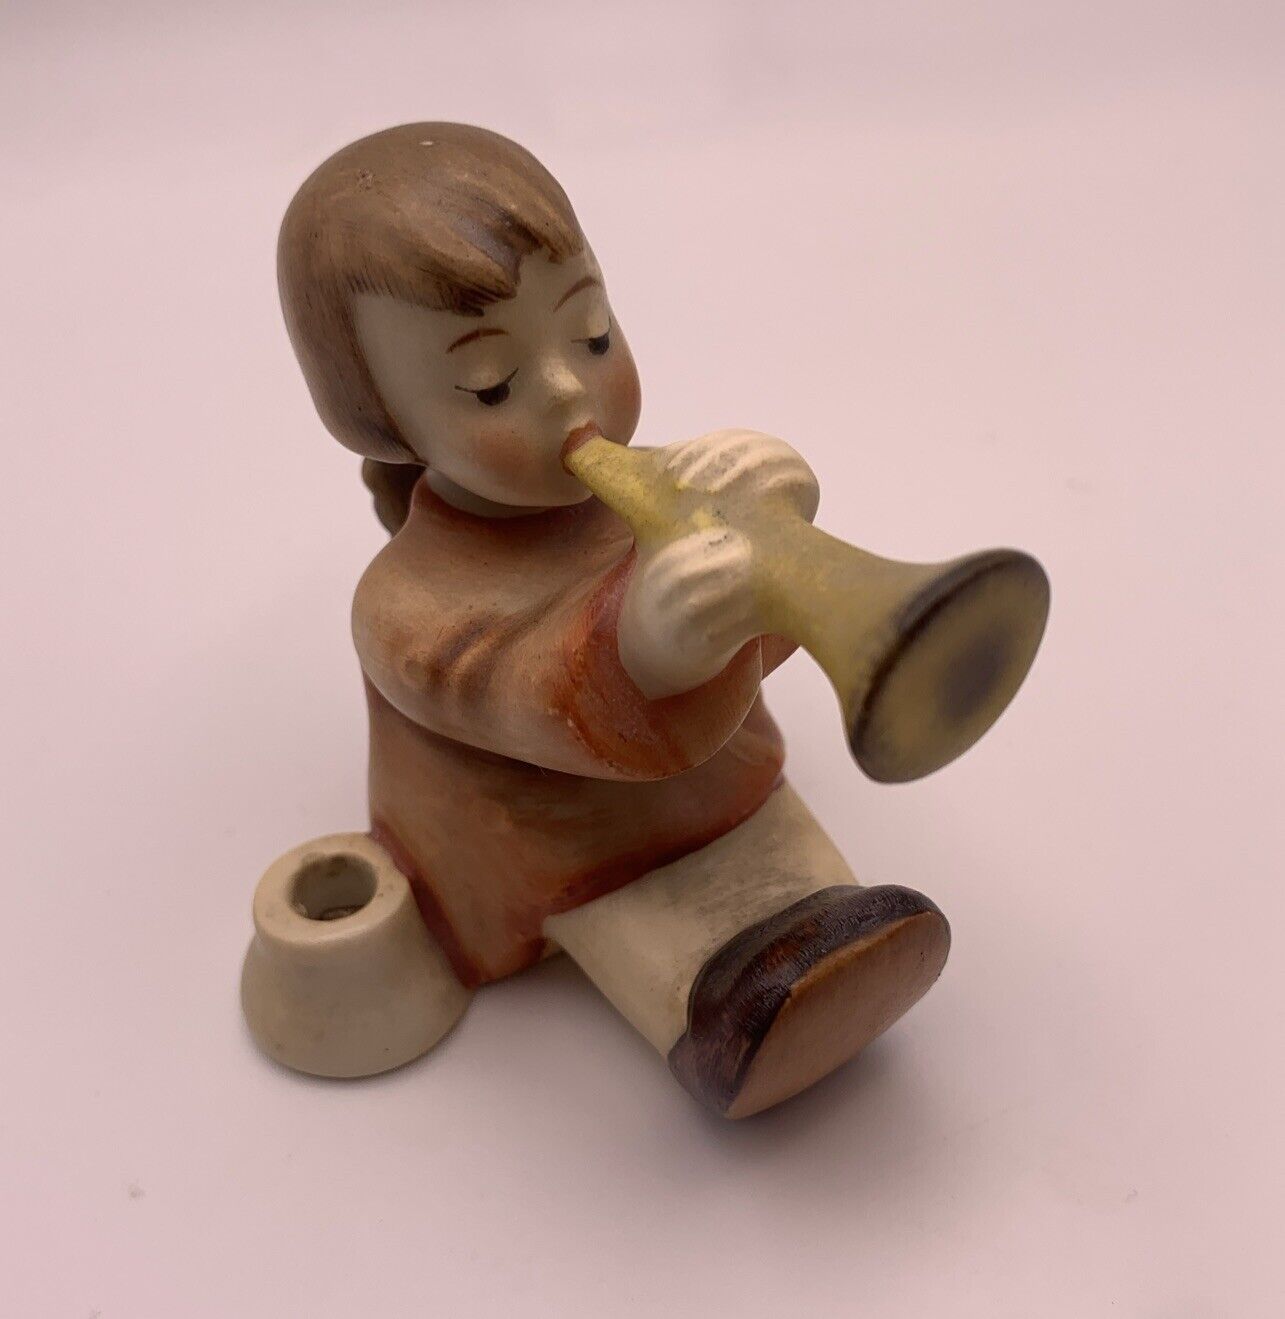 Vintage Goebel Hummel Angel with Trumpet Figurine West Germany 1950-1956? READ